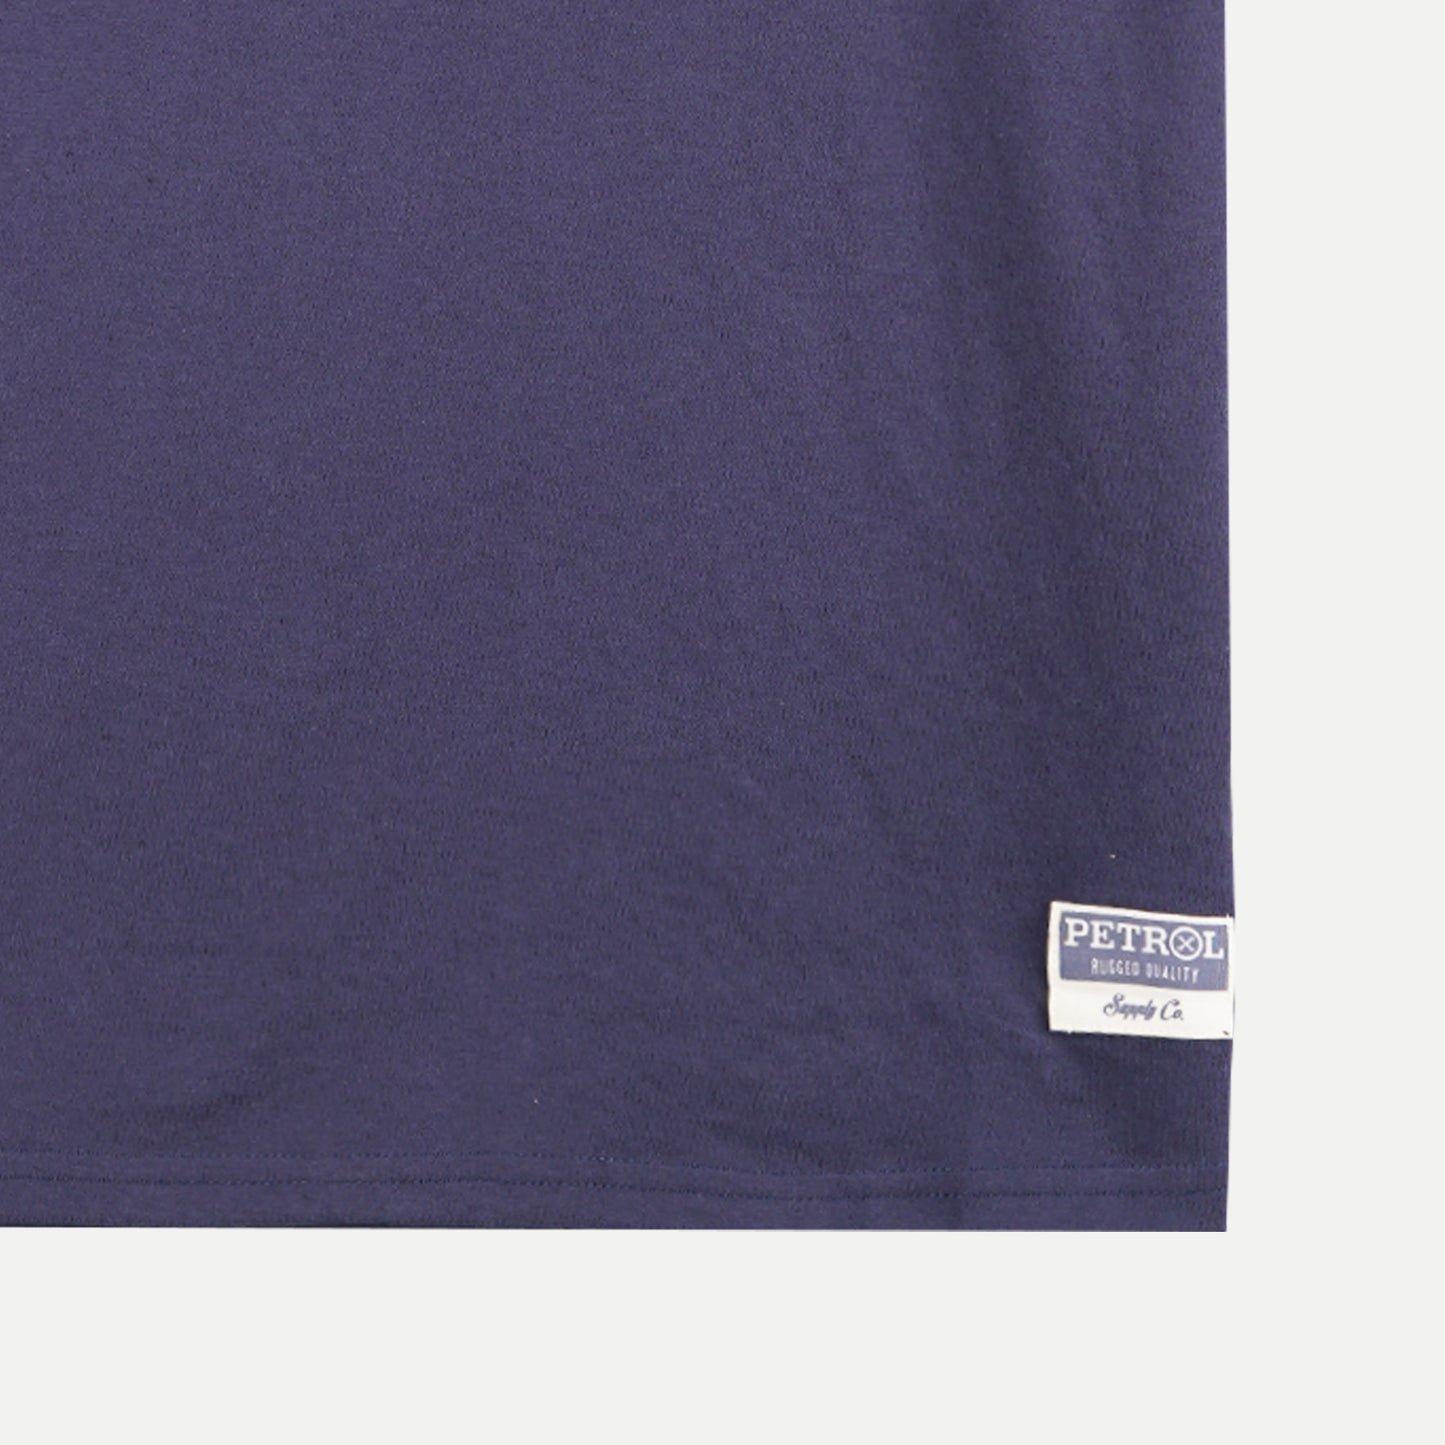 Petrol Basic Tees for Men Slim Fitting Shirt CVC Jersey Fabric Trendy fashion Casual Top Navy T-shirt for Men 126912-U (Navy)